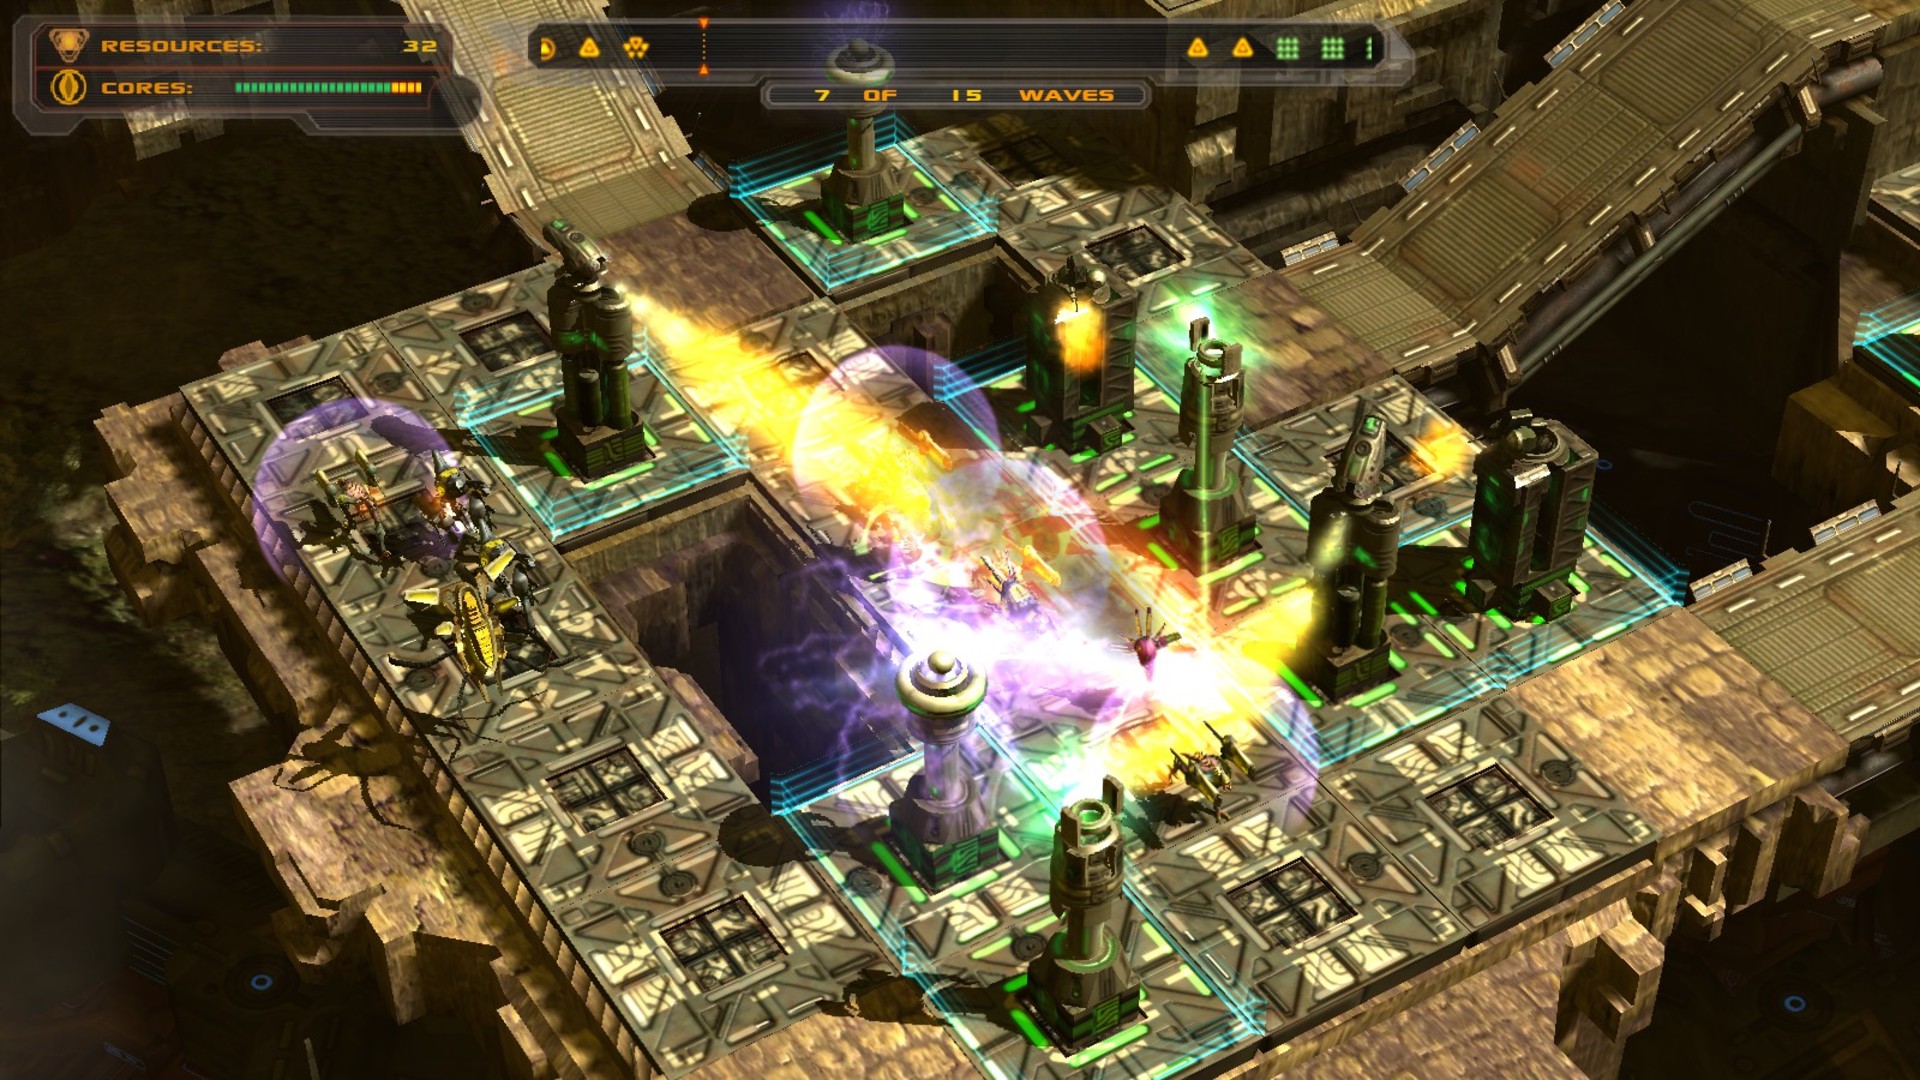 Best tower defense games: towers blast plumes of fire at oncoming mechs in Defense Grid.